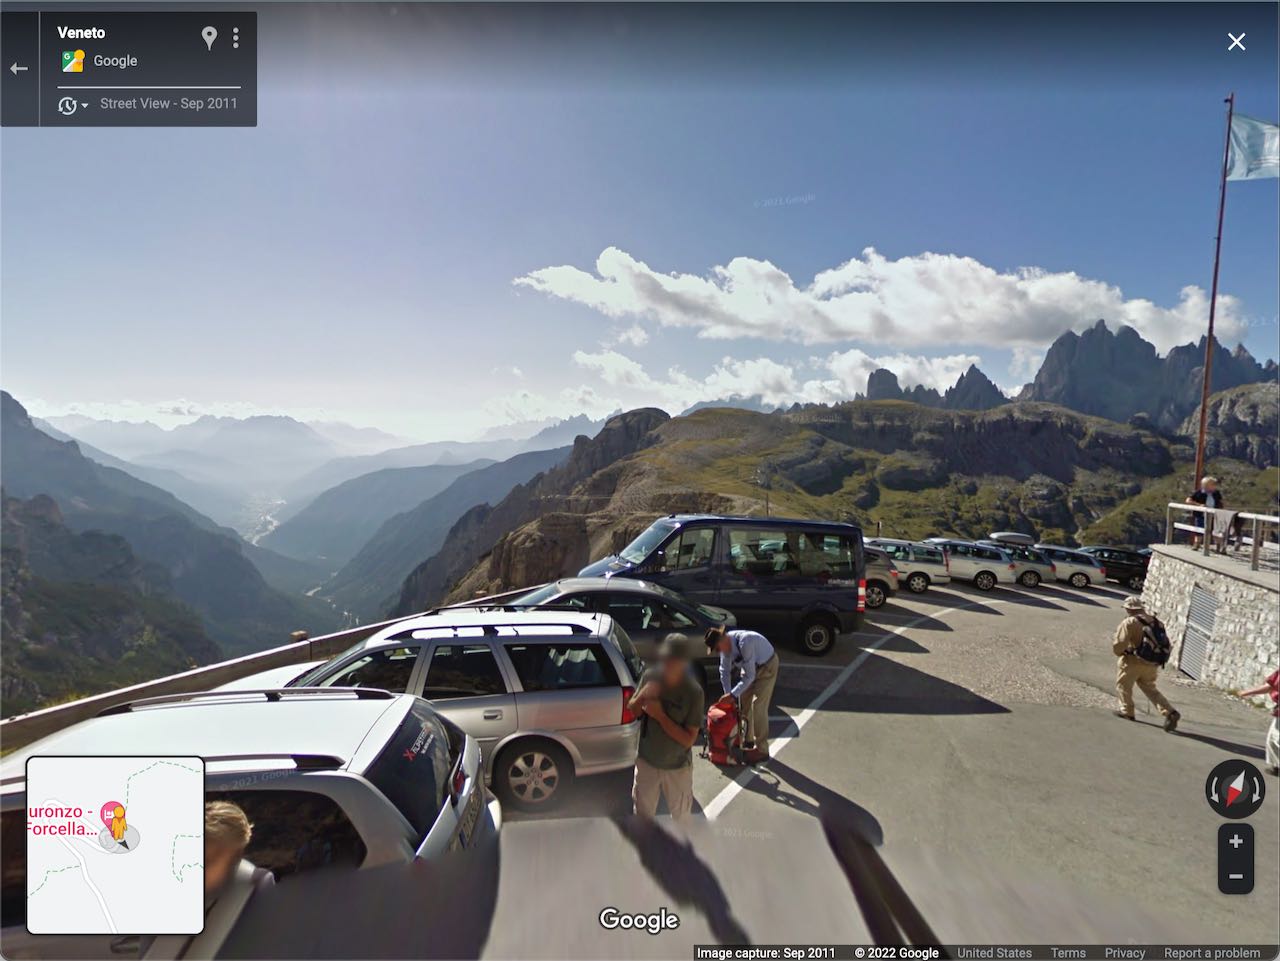 2011 Google street view of Tre Cime di Lavaredo in the Dolomites of Italy